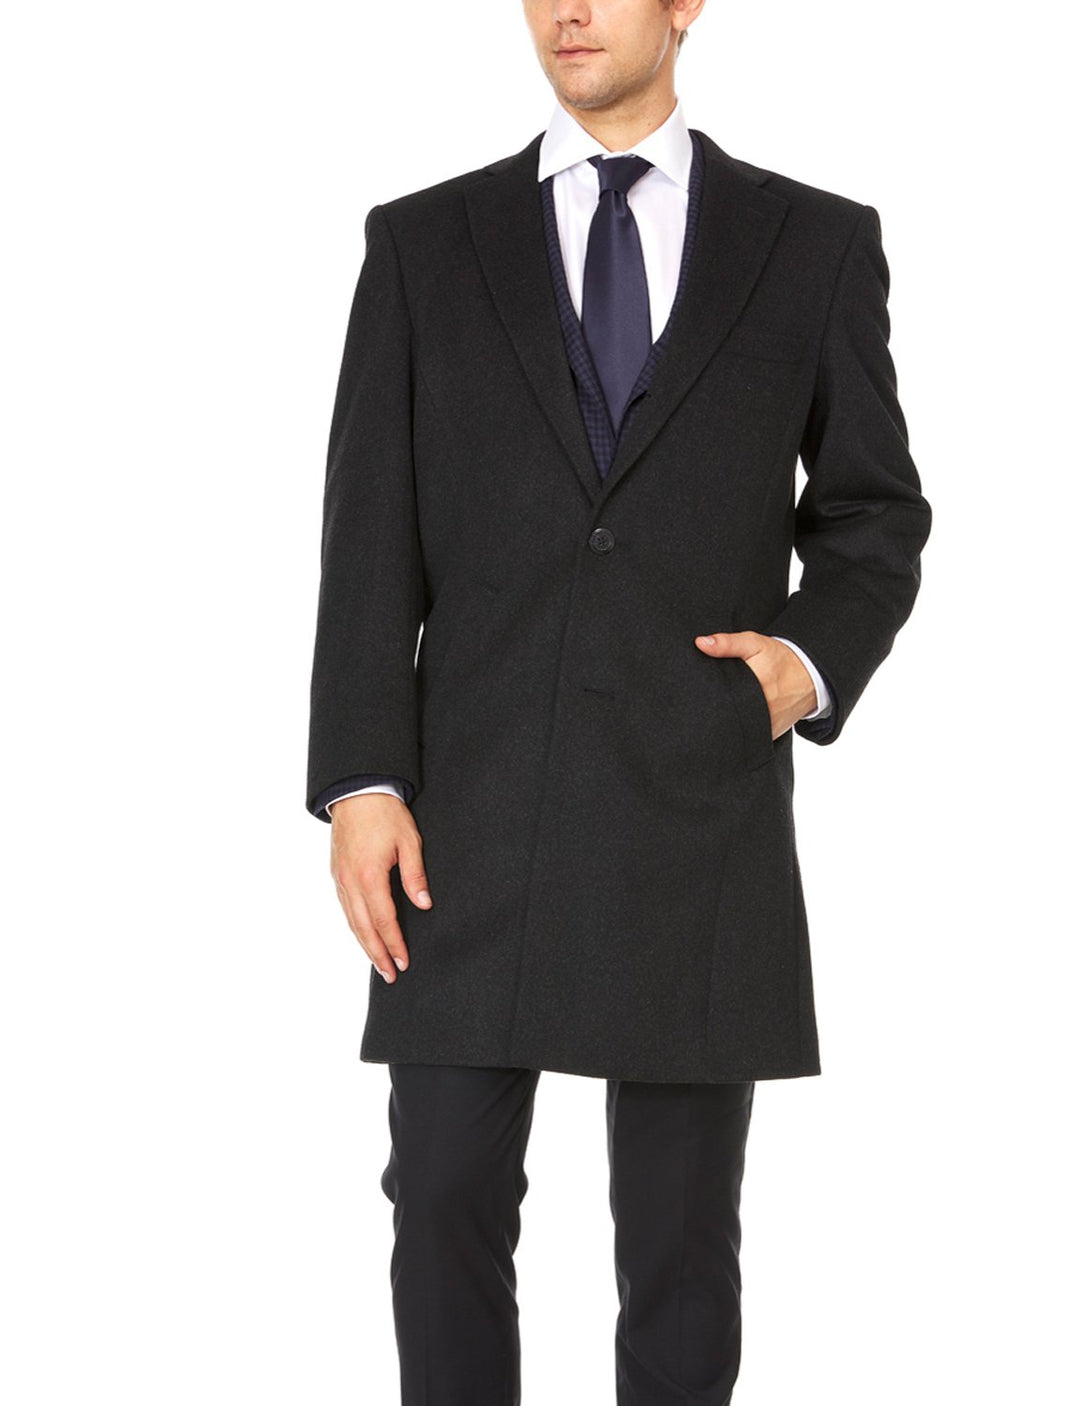 Prontomoda Men's Charcoal Luxury Wool/Cashmere Three-Quarter Length Topcoat-CLEARANCE - FINAL SALE